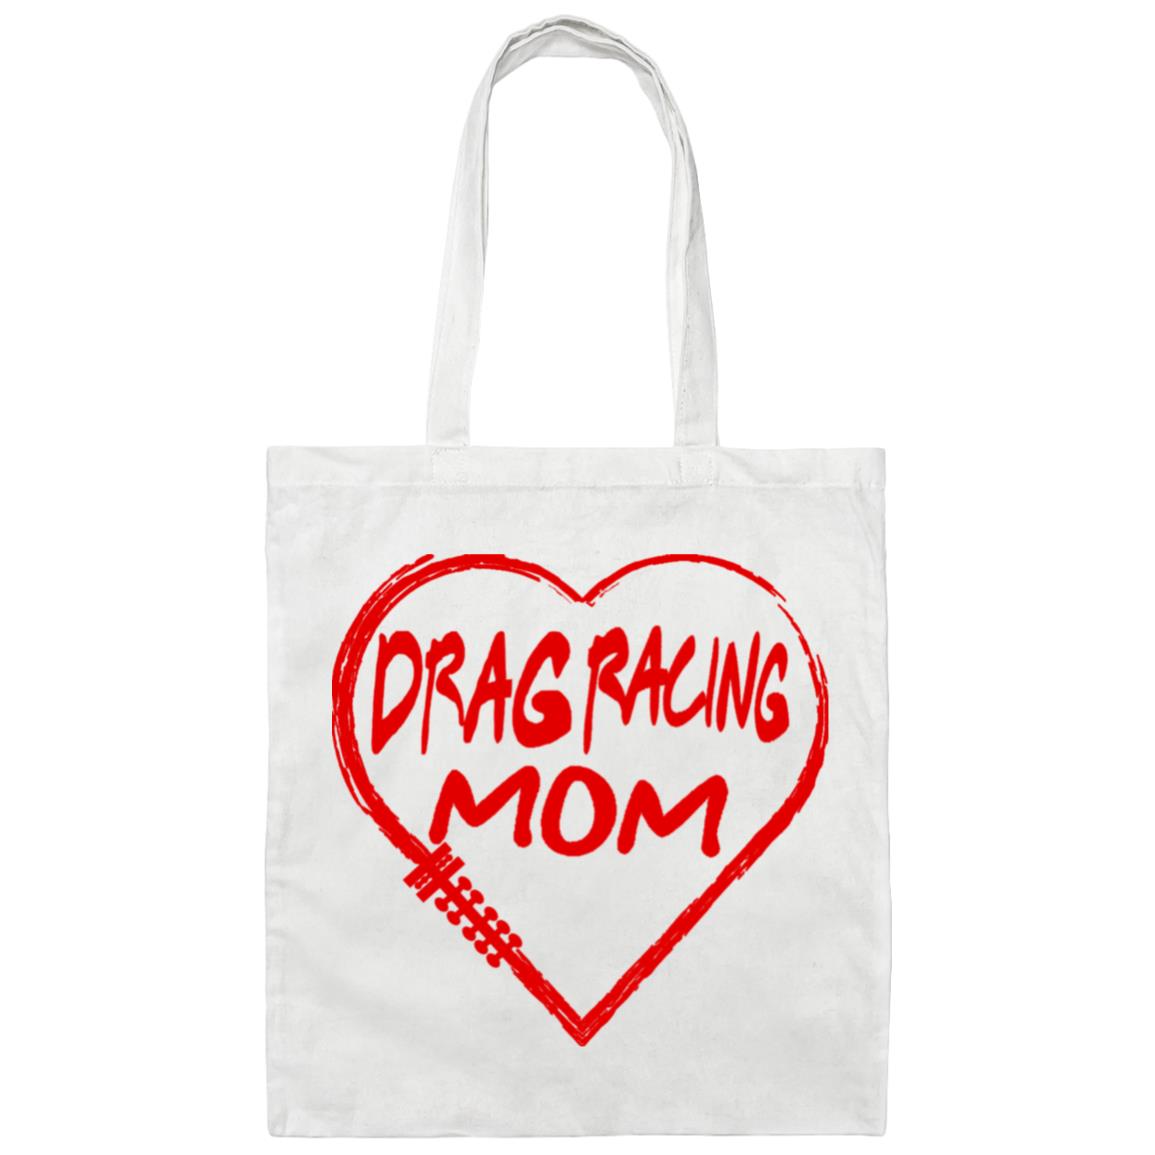 Drag Racing Mom Heart Canvas Tote Bag